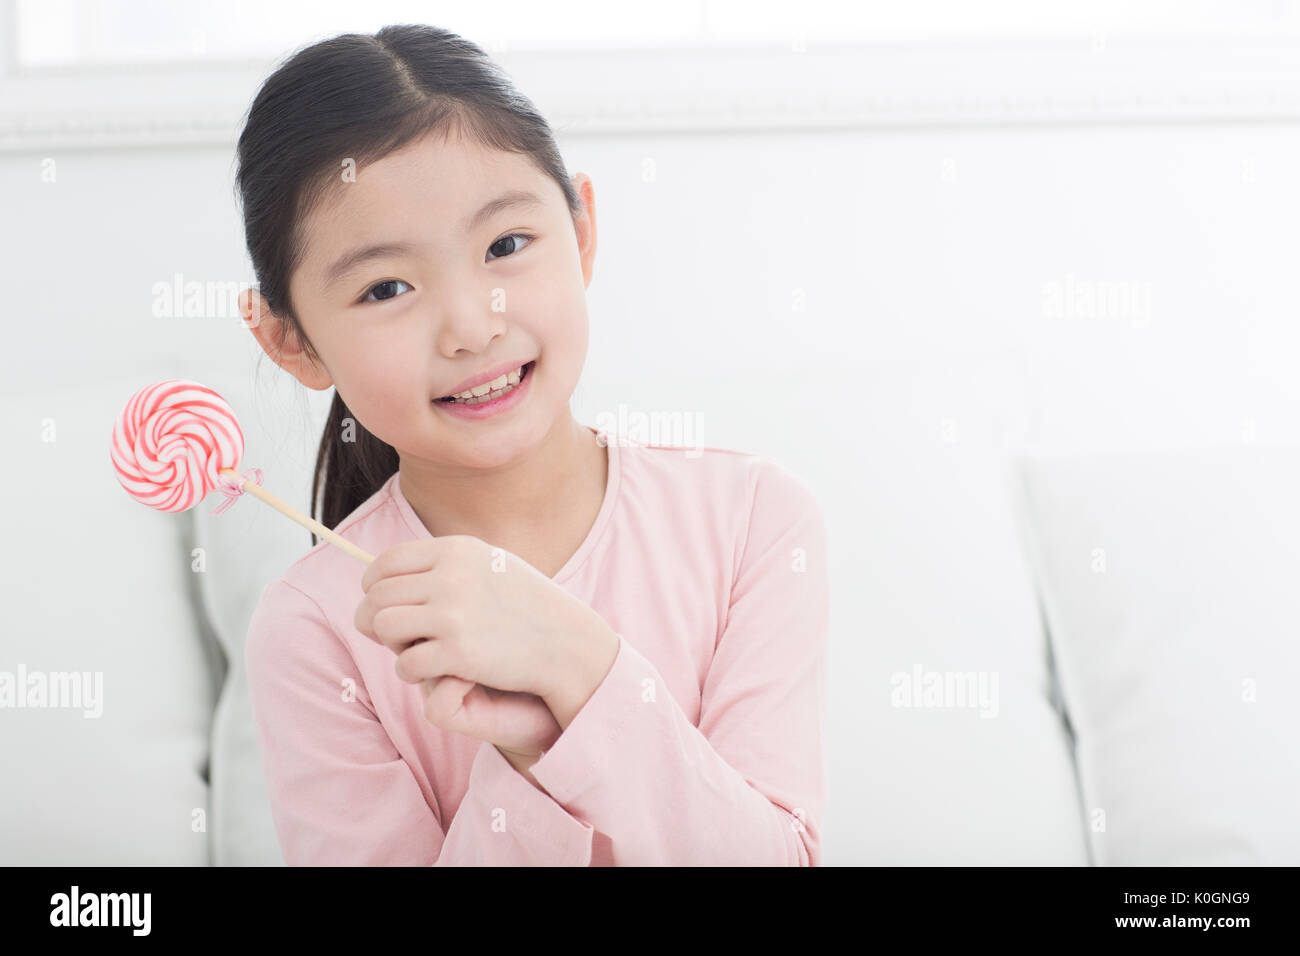 Portrait of smiling girl with lollipop Banque D'Images